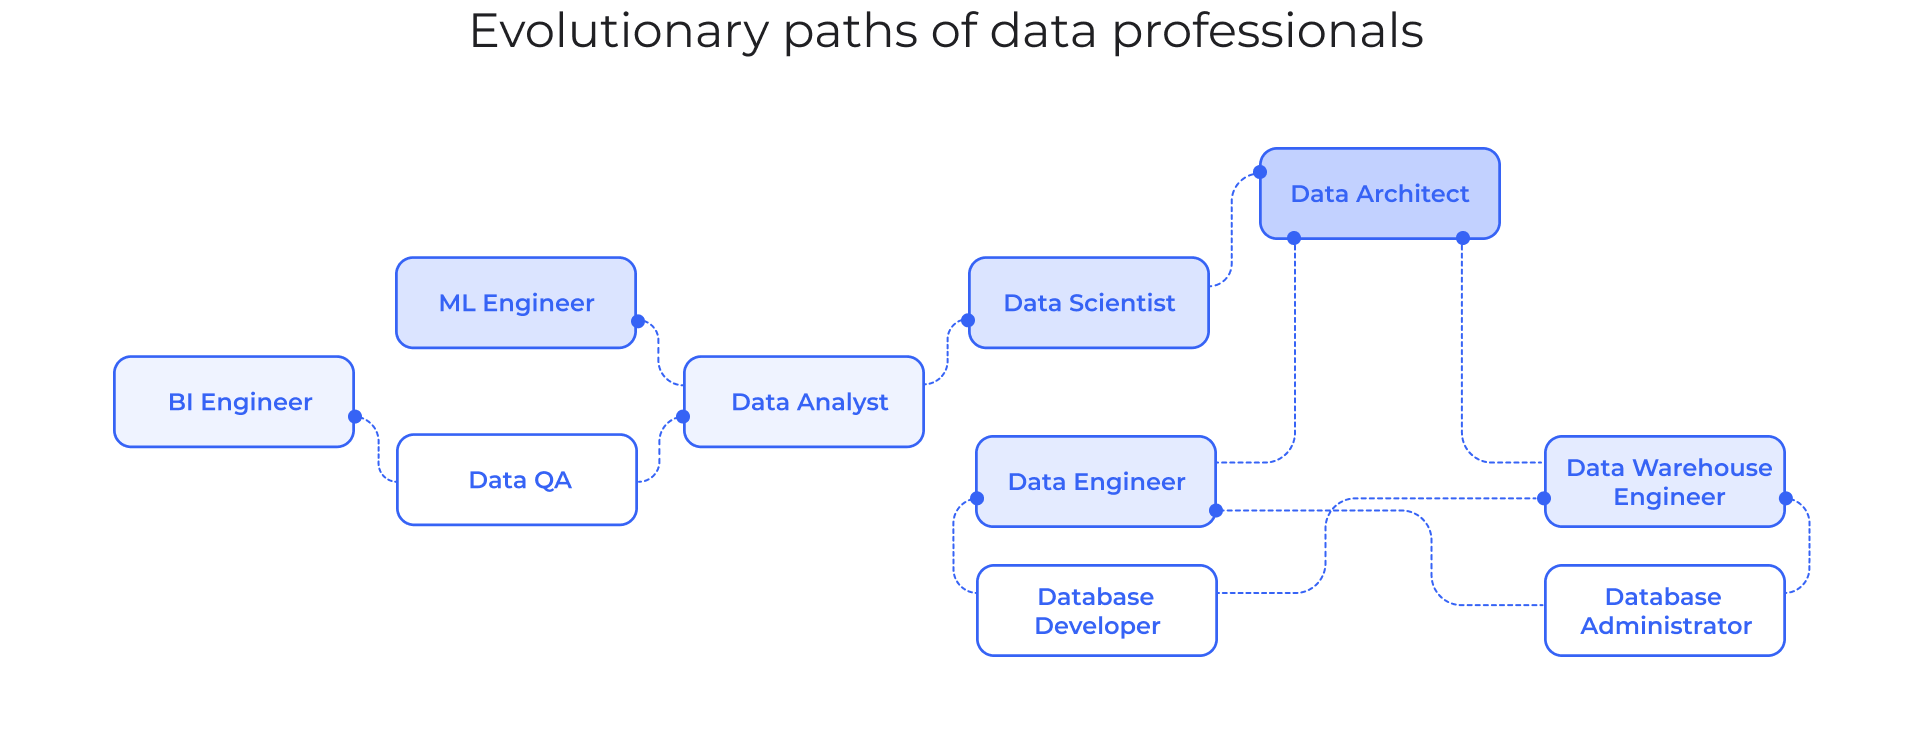 Evolutionary paths of data professionals